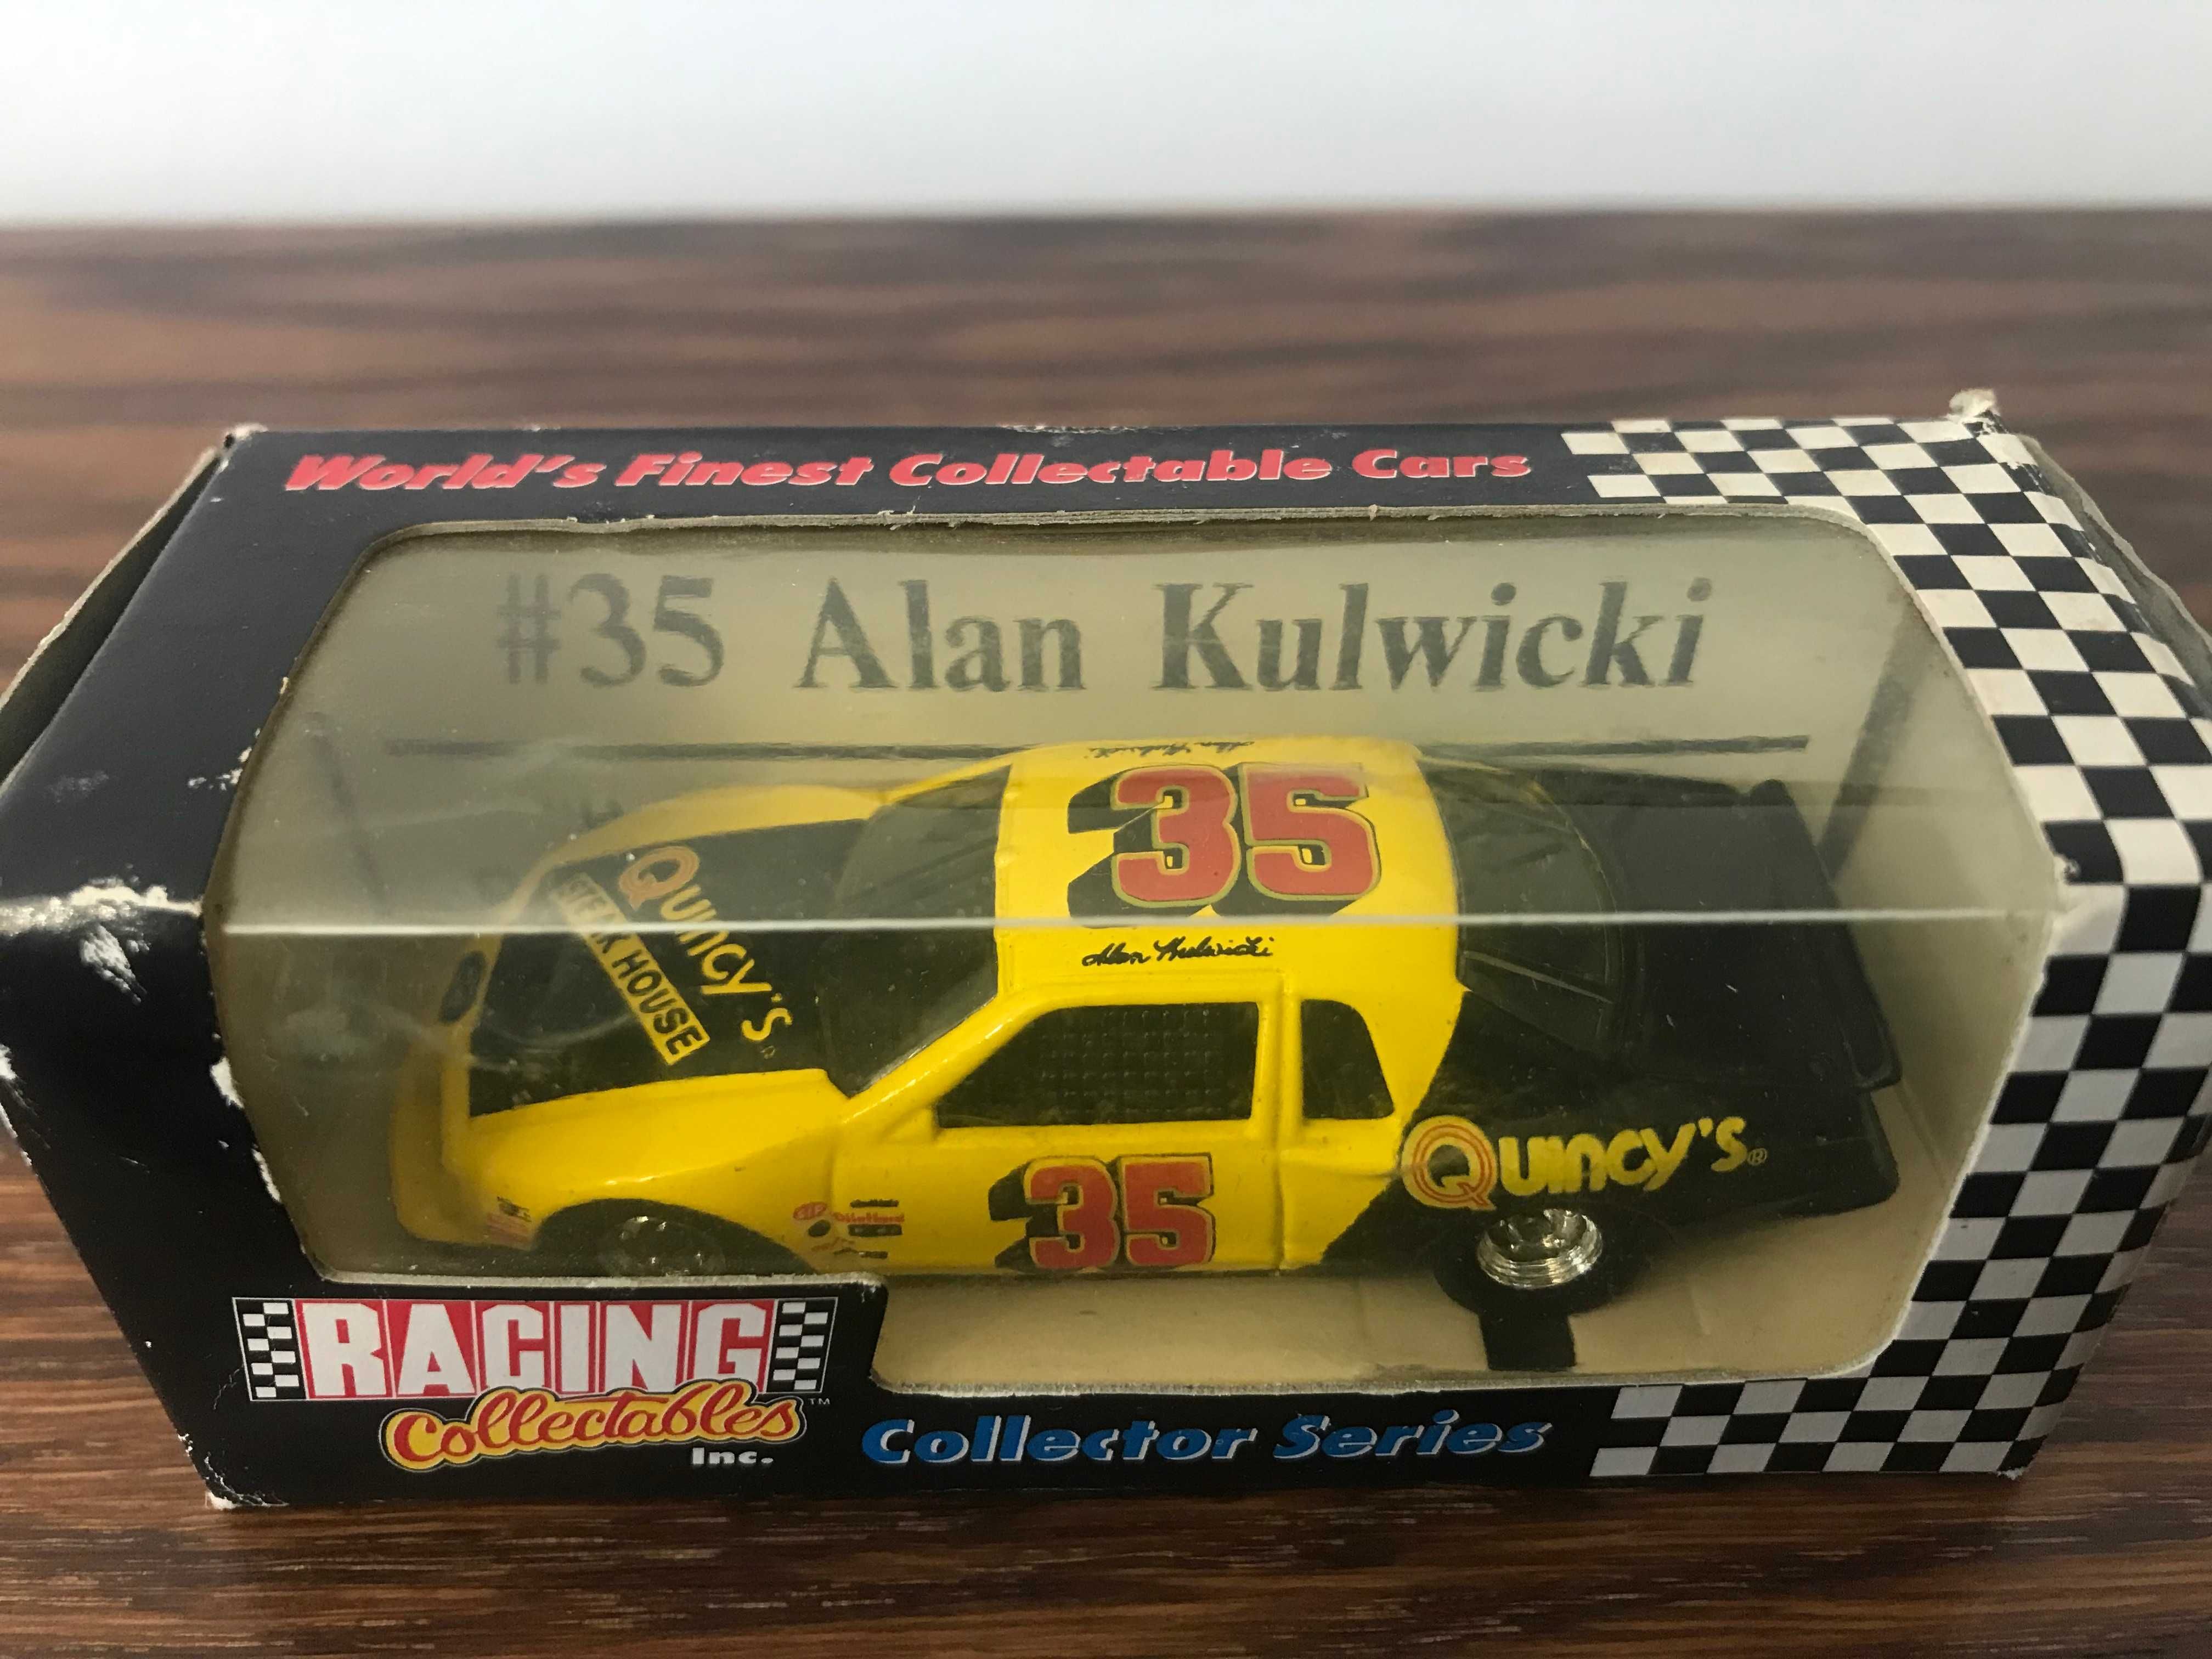 Alan Kulwicki 1991 Racing Collectables #35 Quincy's resorak vintage